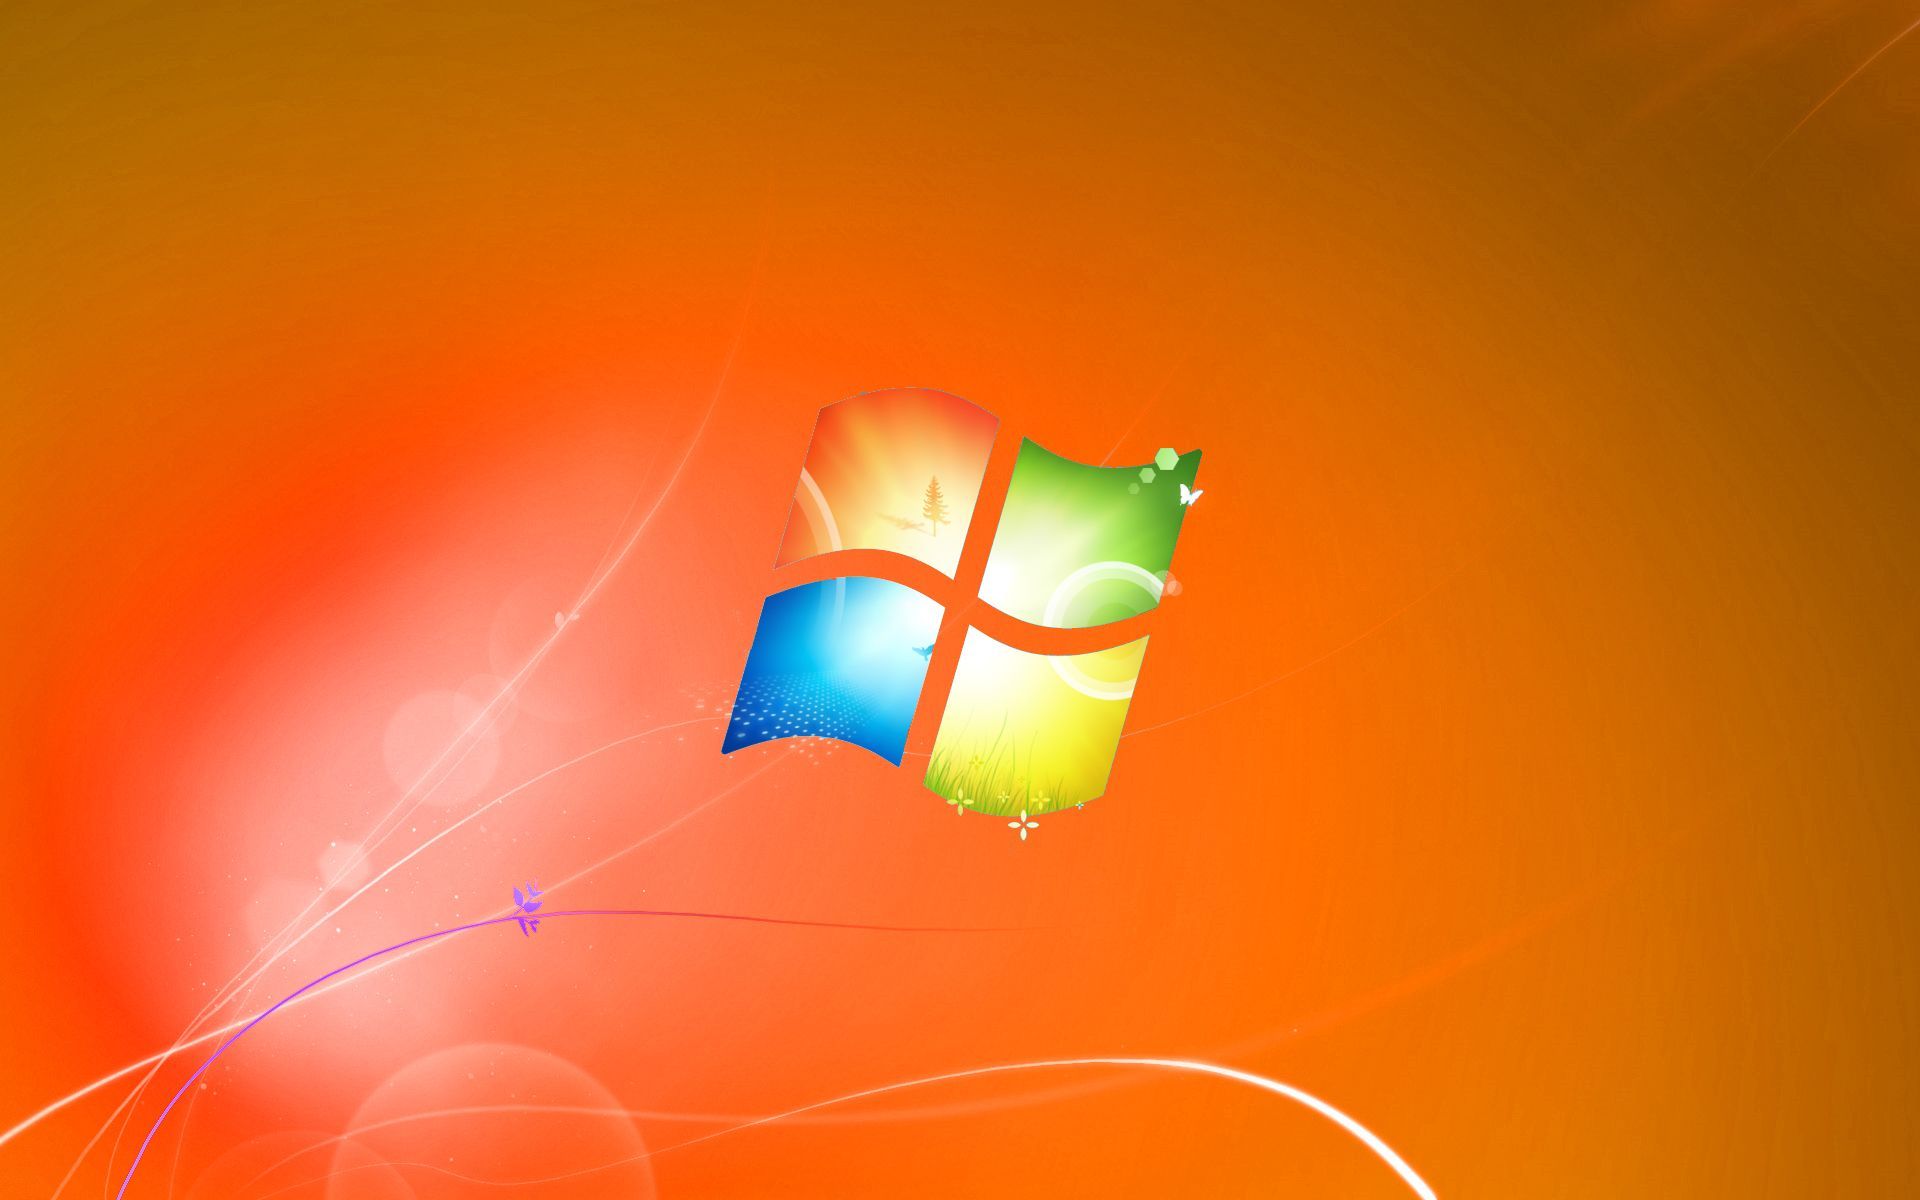 Windows 7 Default Wallpaper Orange Version. Windows wallpaper, Wallpaper windows Ultra HD 4k wallpaper